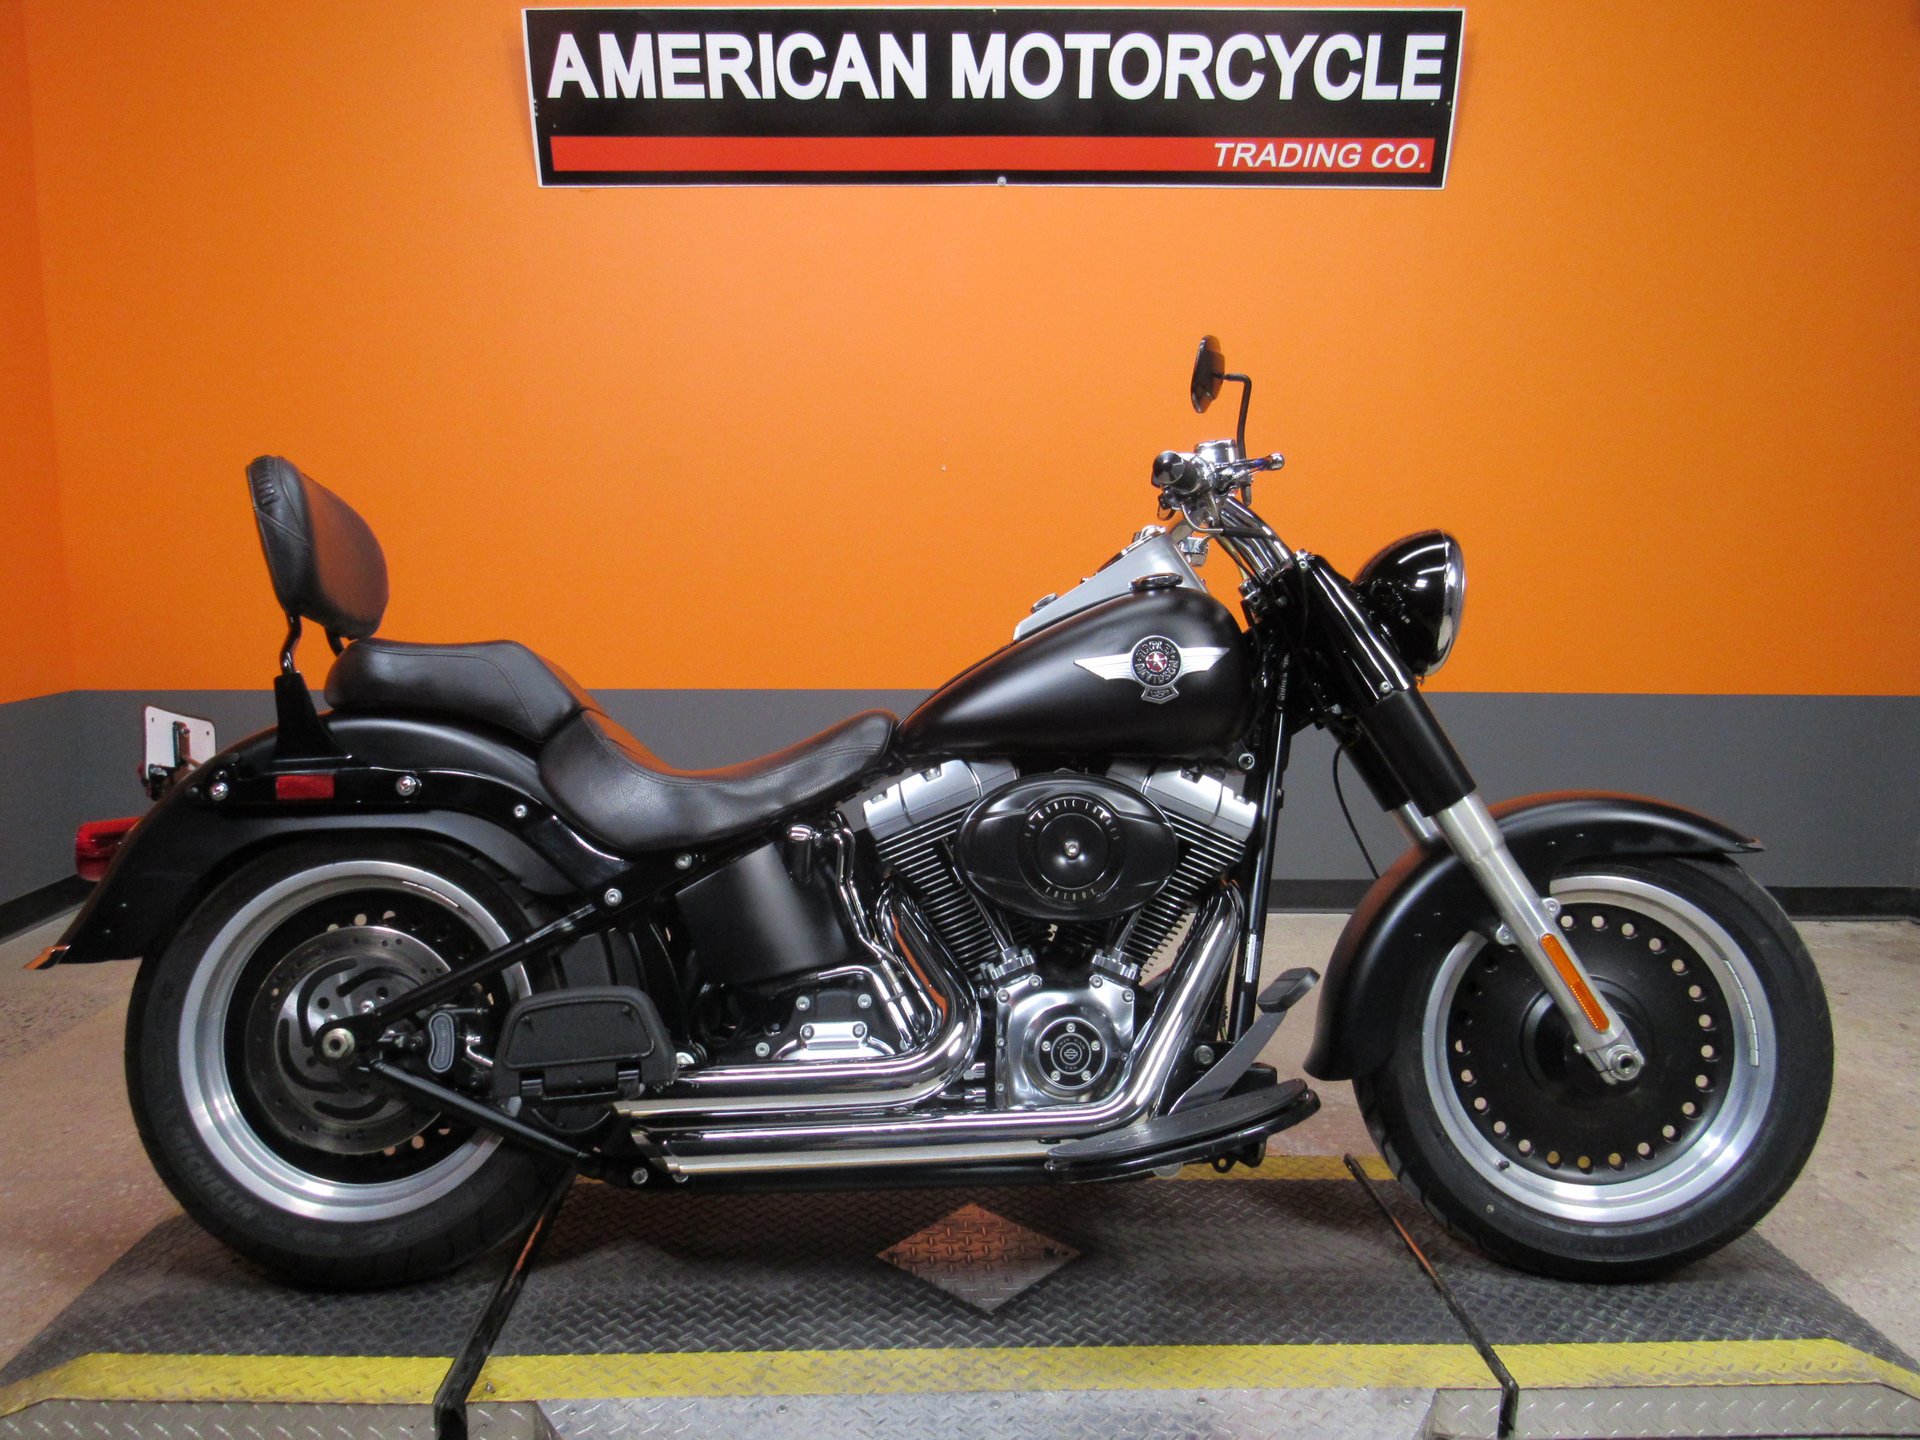 2010 Harley-Davidson Softail Fat Boy | American Motorcycle Trading